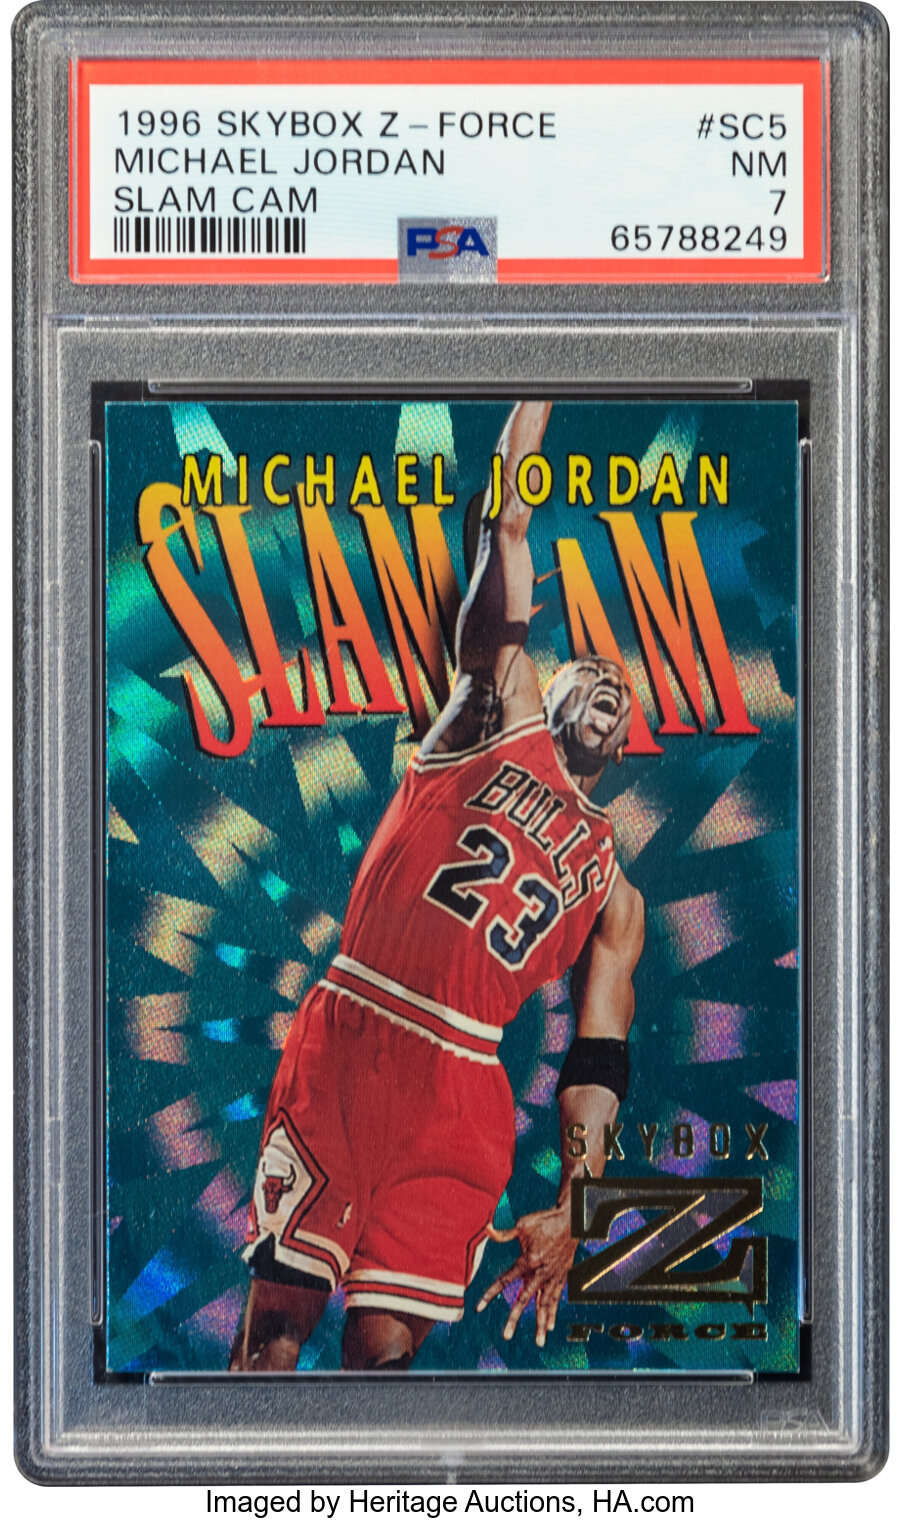 1996 Skybox Z-Force Michael Jordan (Slam Cam) #SC5 PSA NM 7